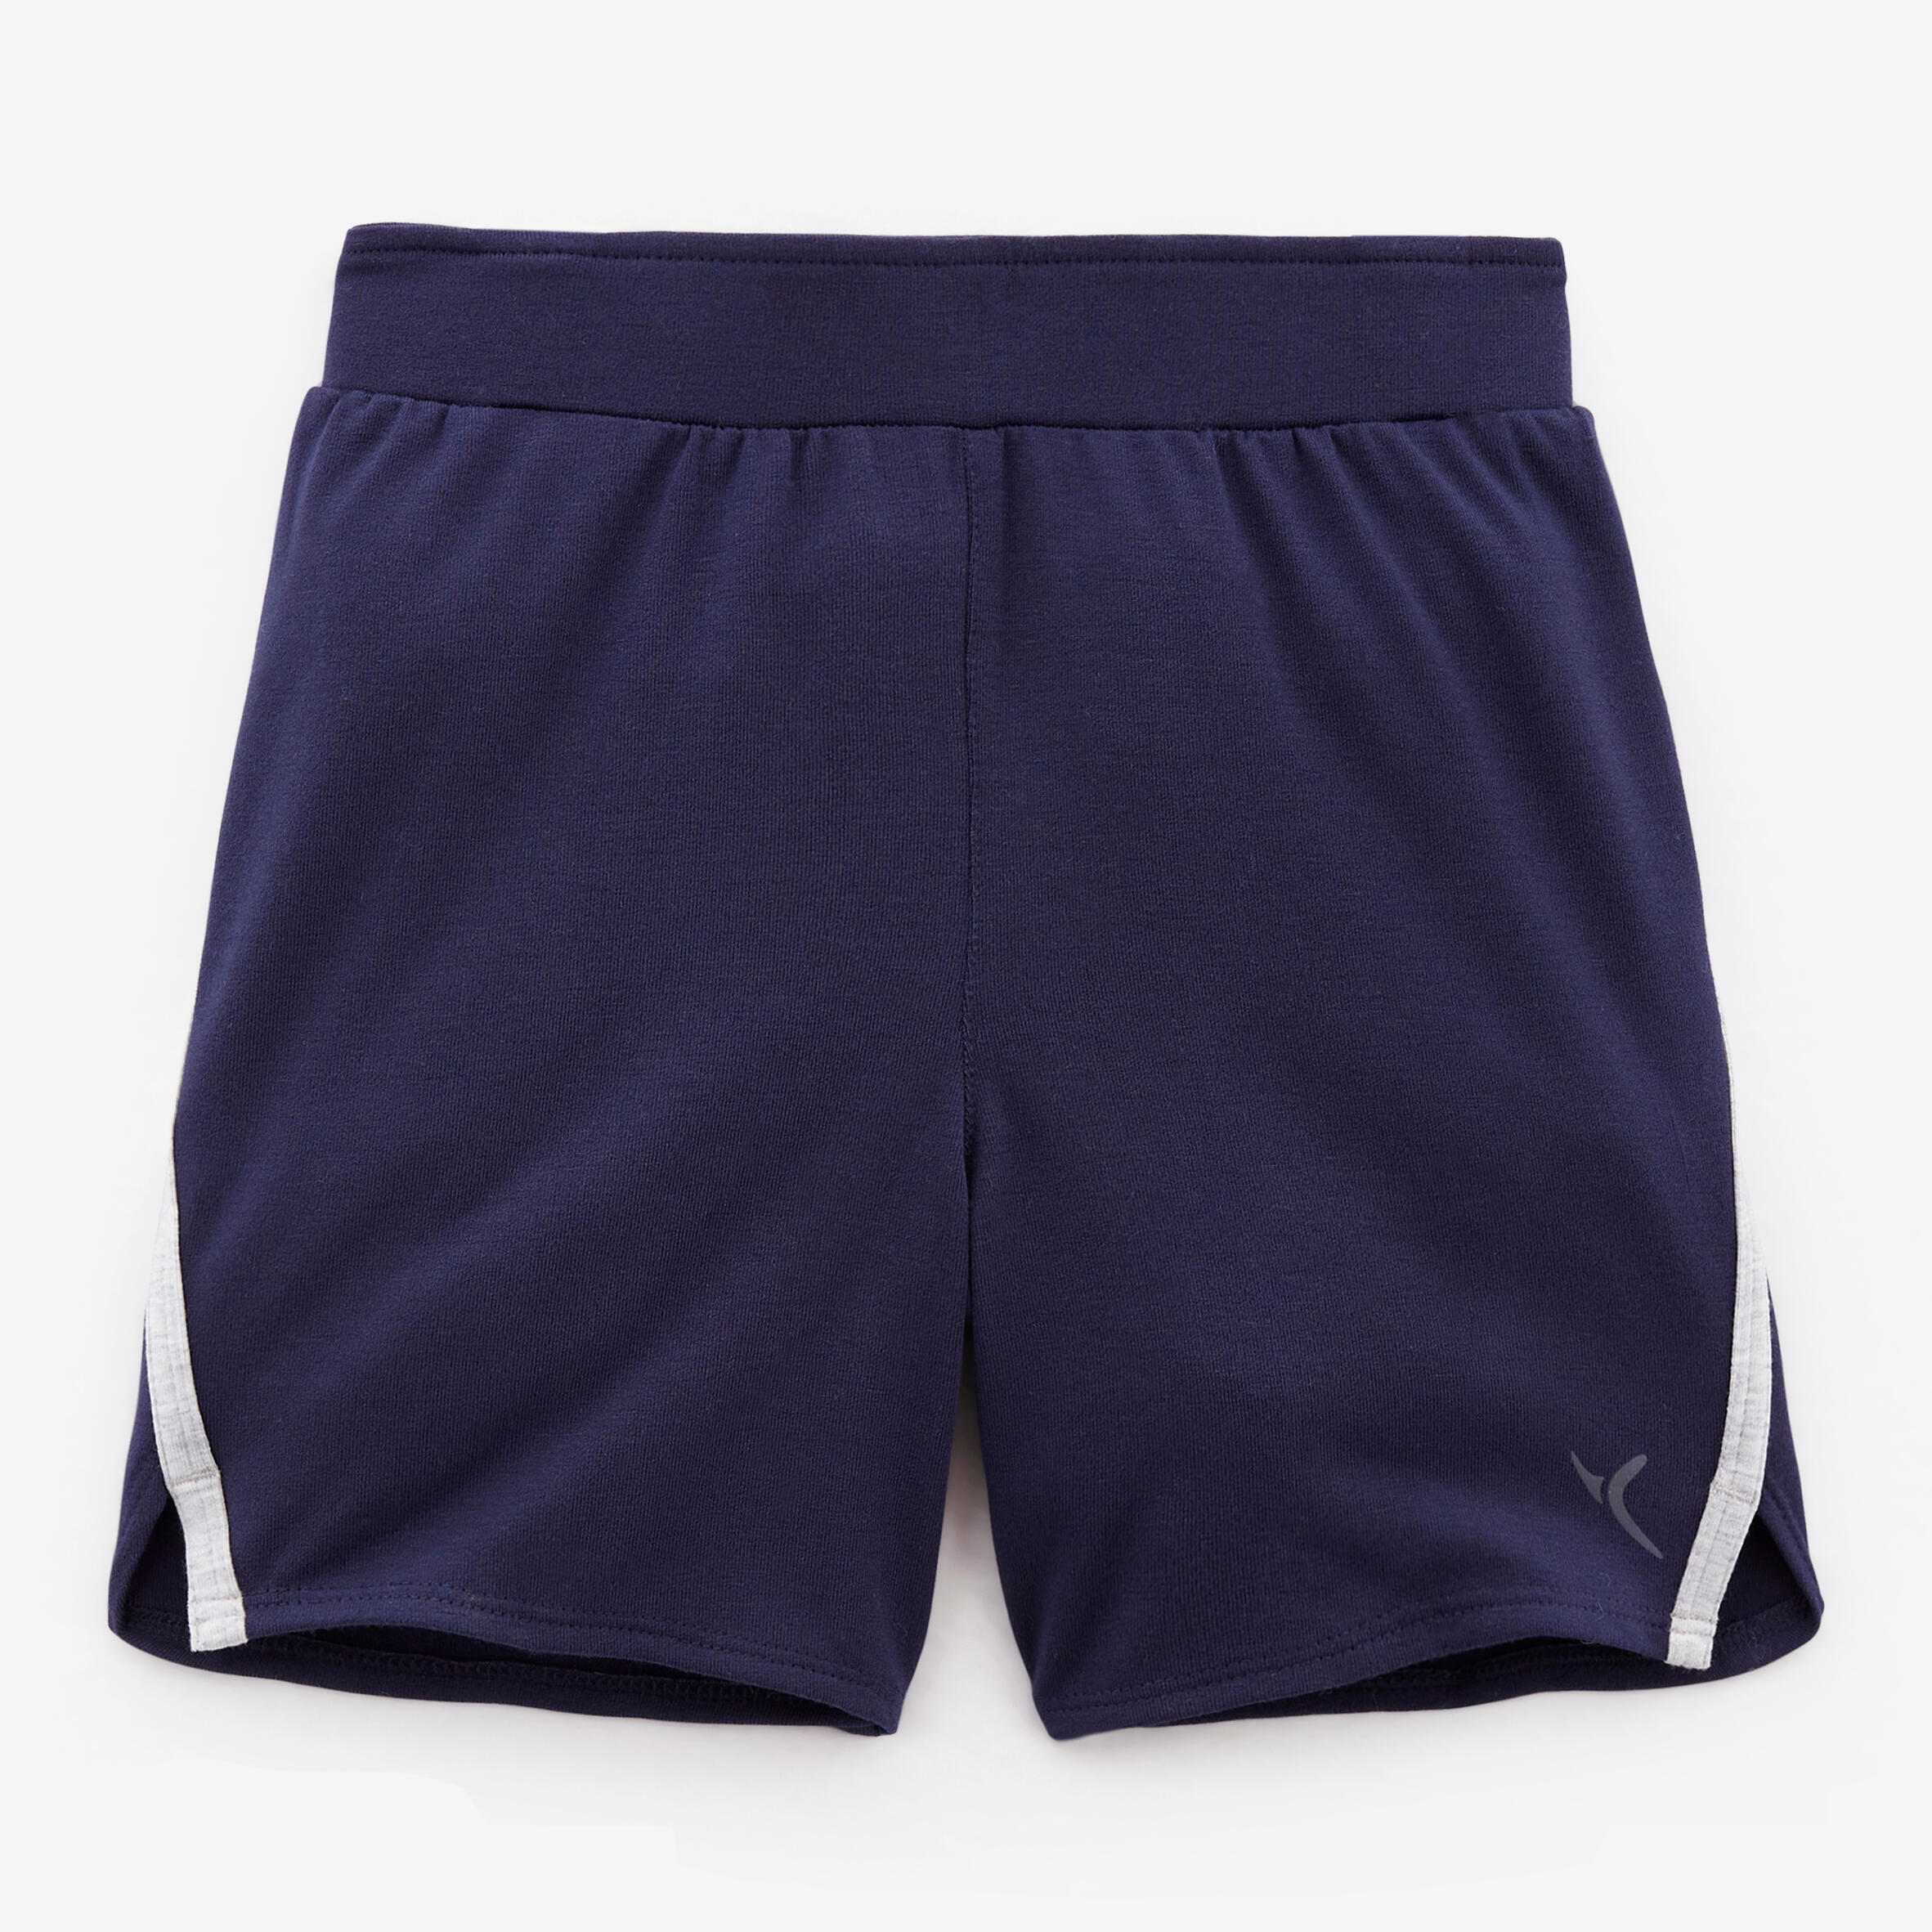 Kids' Breathable Adjustable Shorts 500 - Navy Blue 2/4